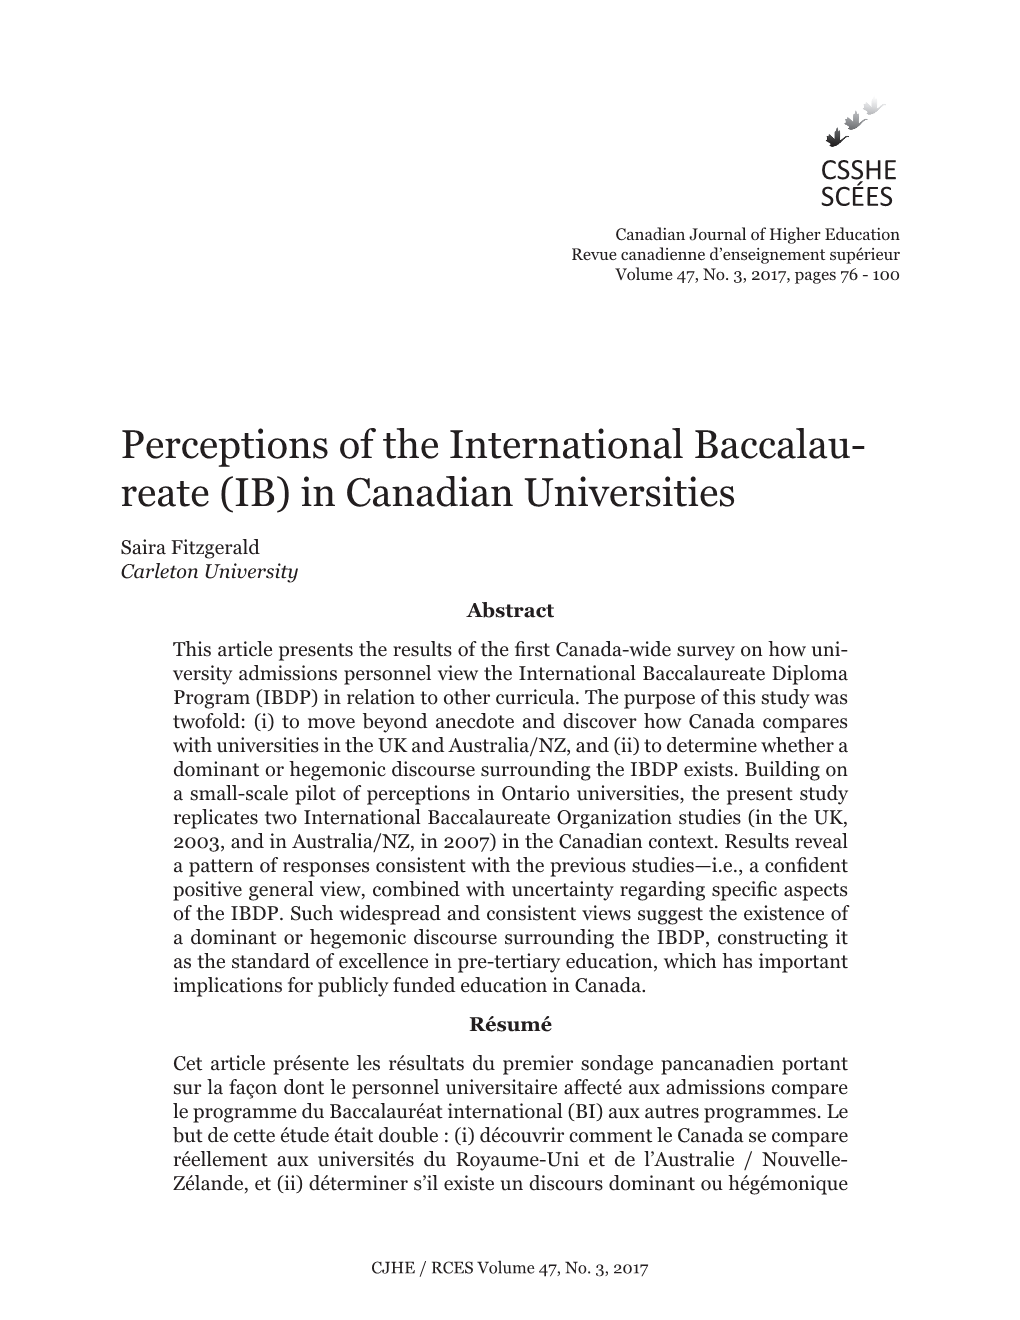 (IB) in Canadian Universities